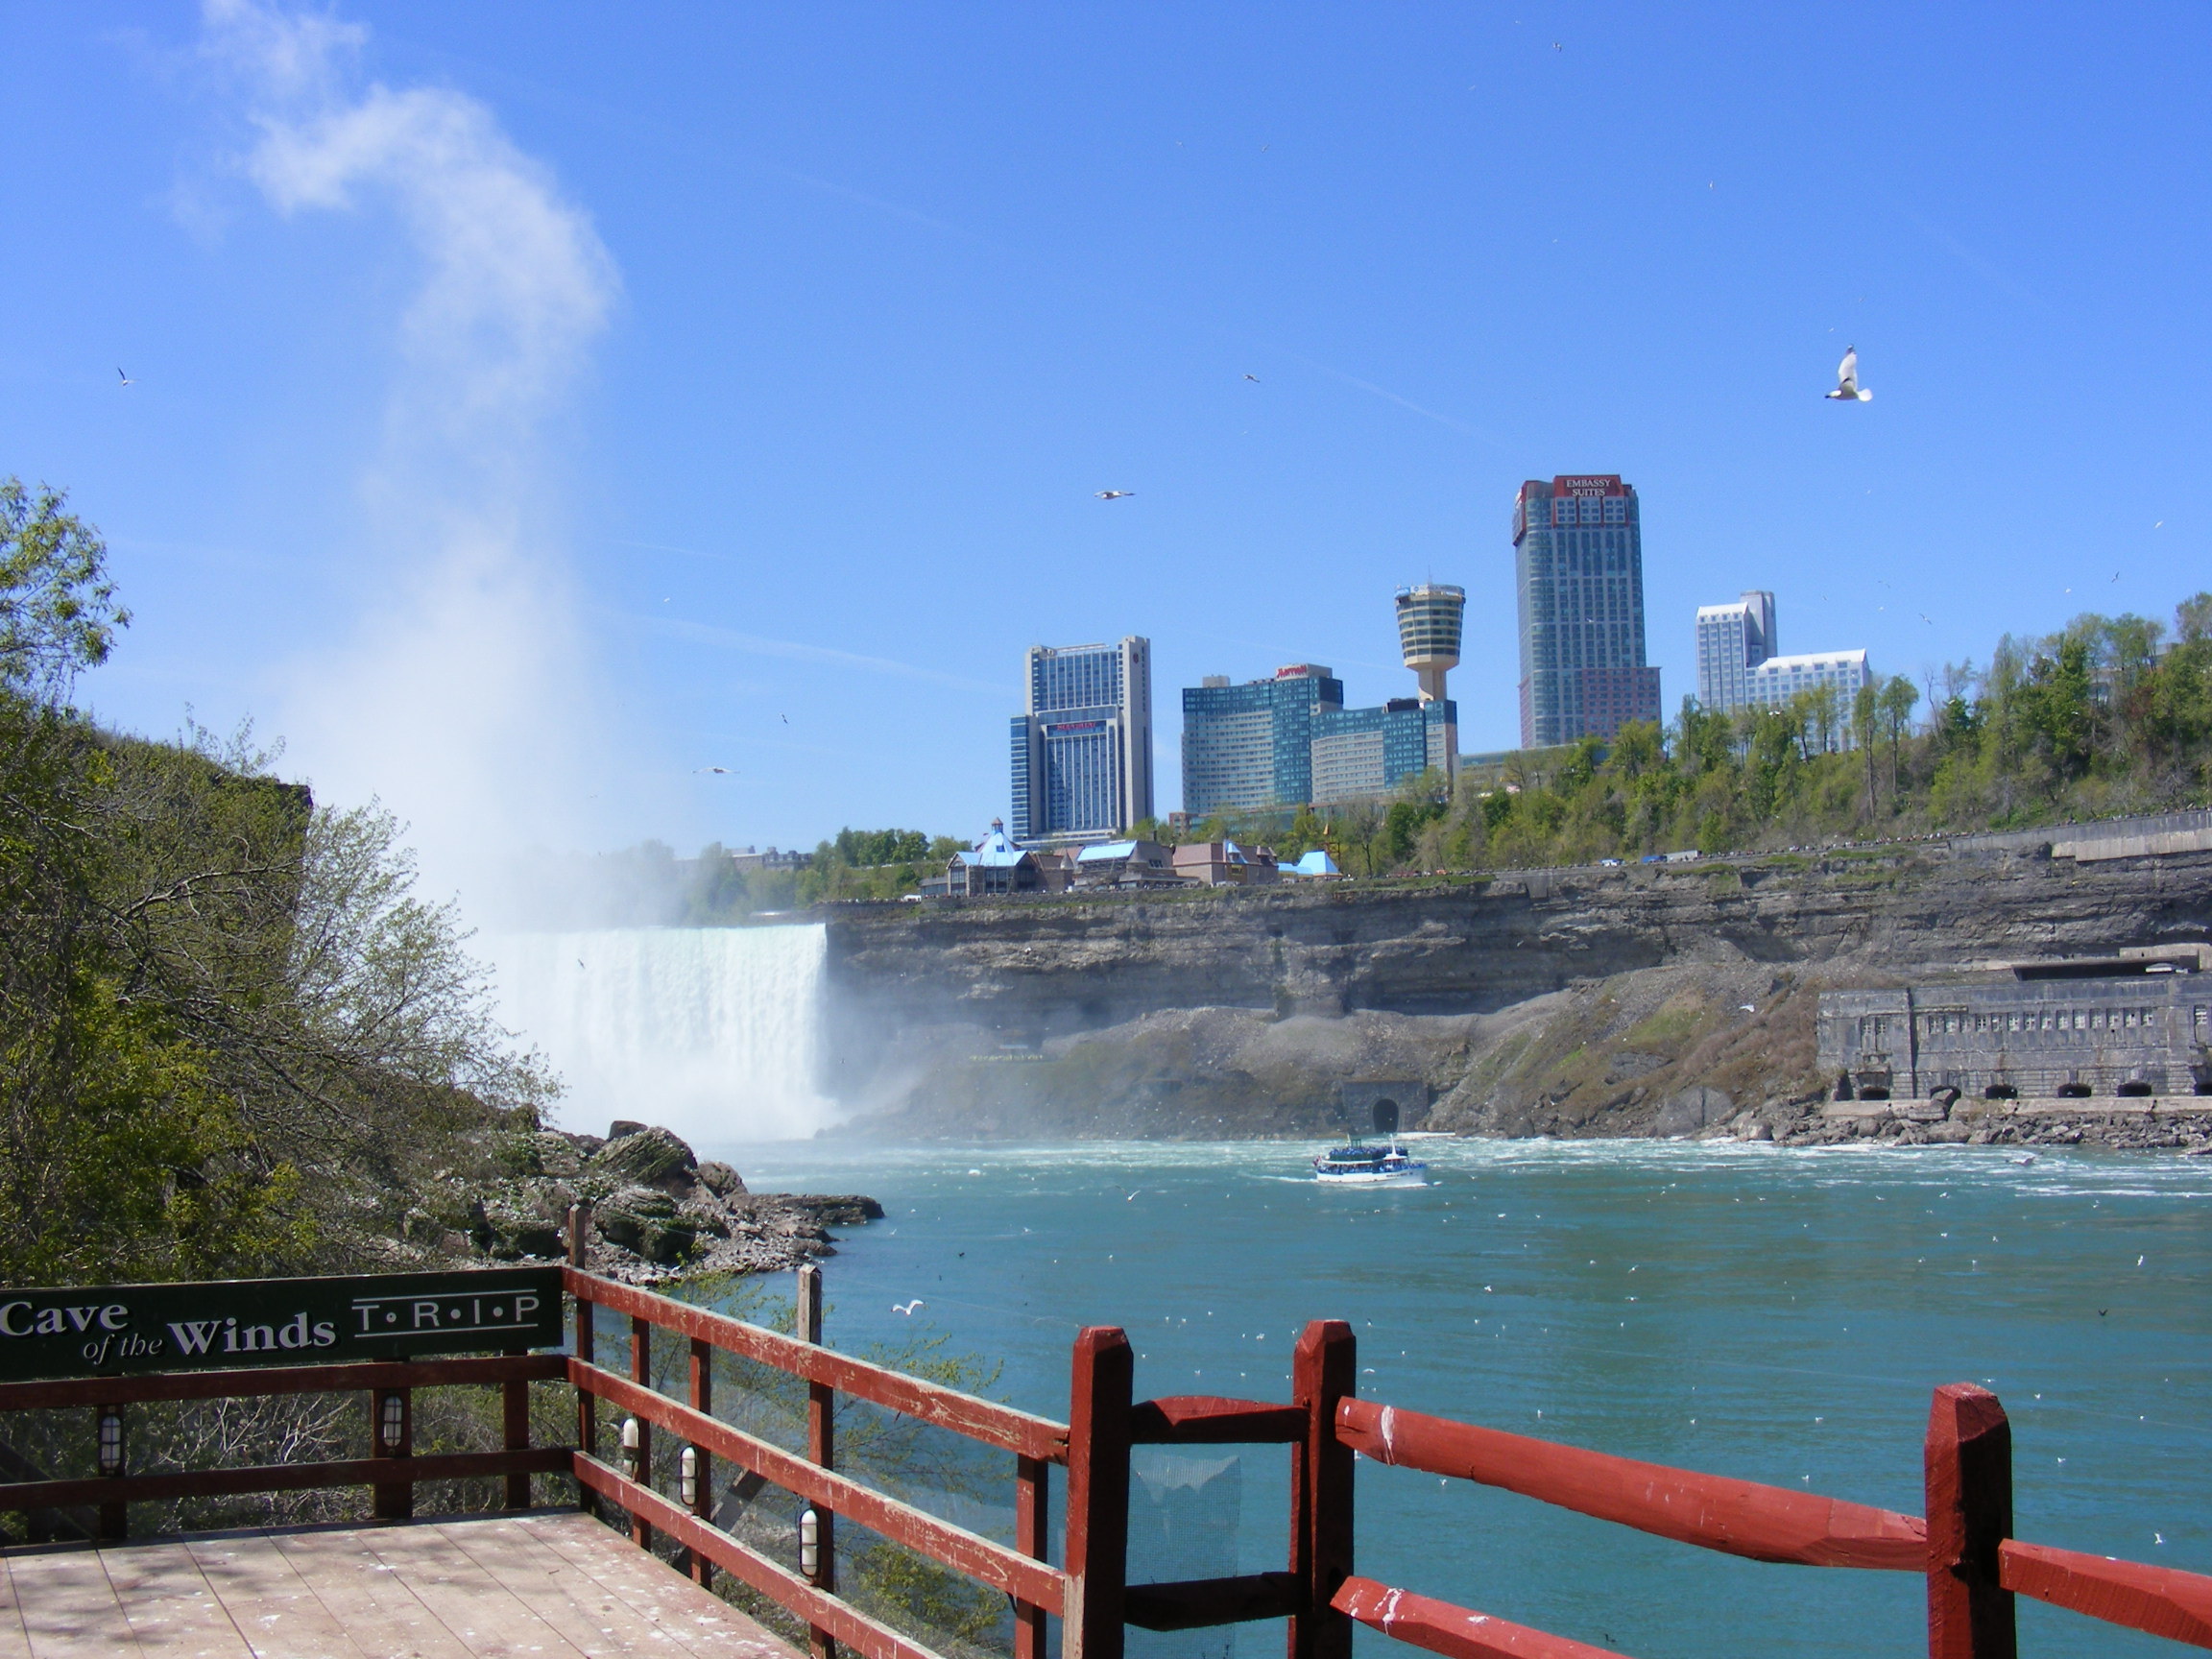 Beauty of Niagara Falls, Scenery, Plants, Pure, Purity, HQ Photo